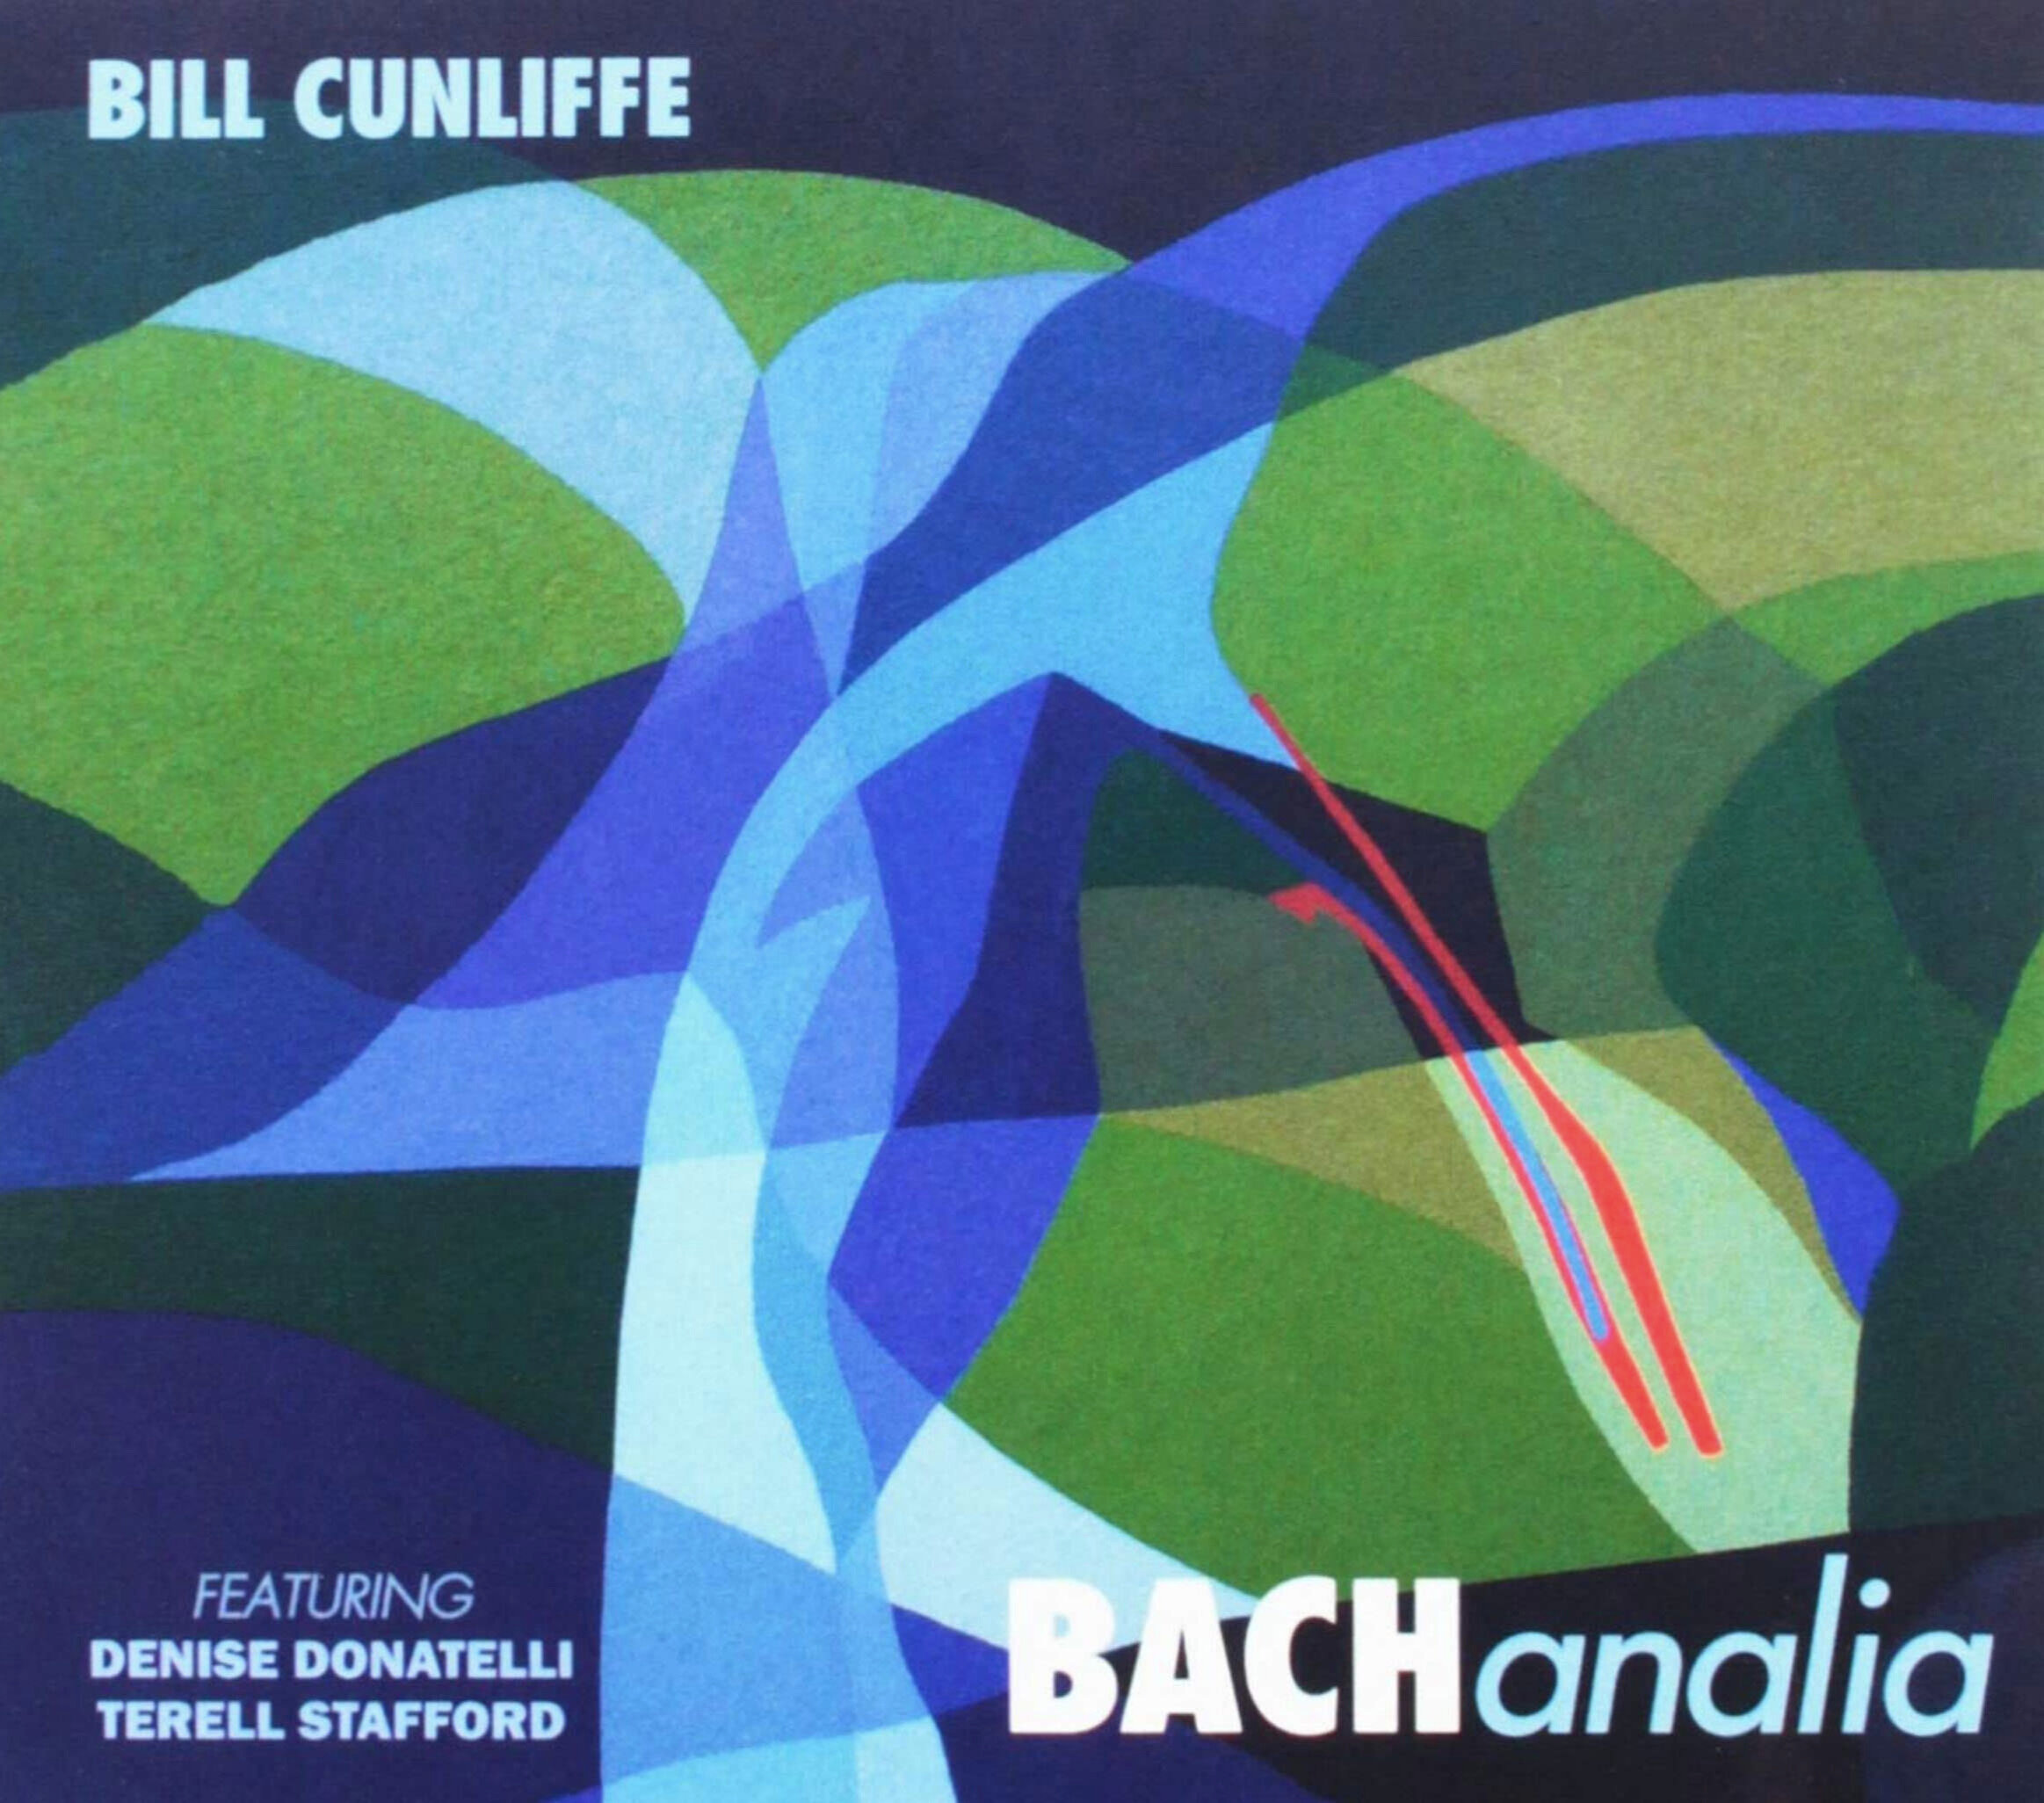 bachanalia-bill-cunliffe-2017-1.jpg